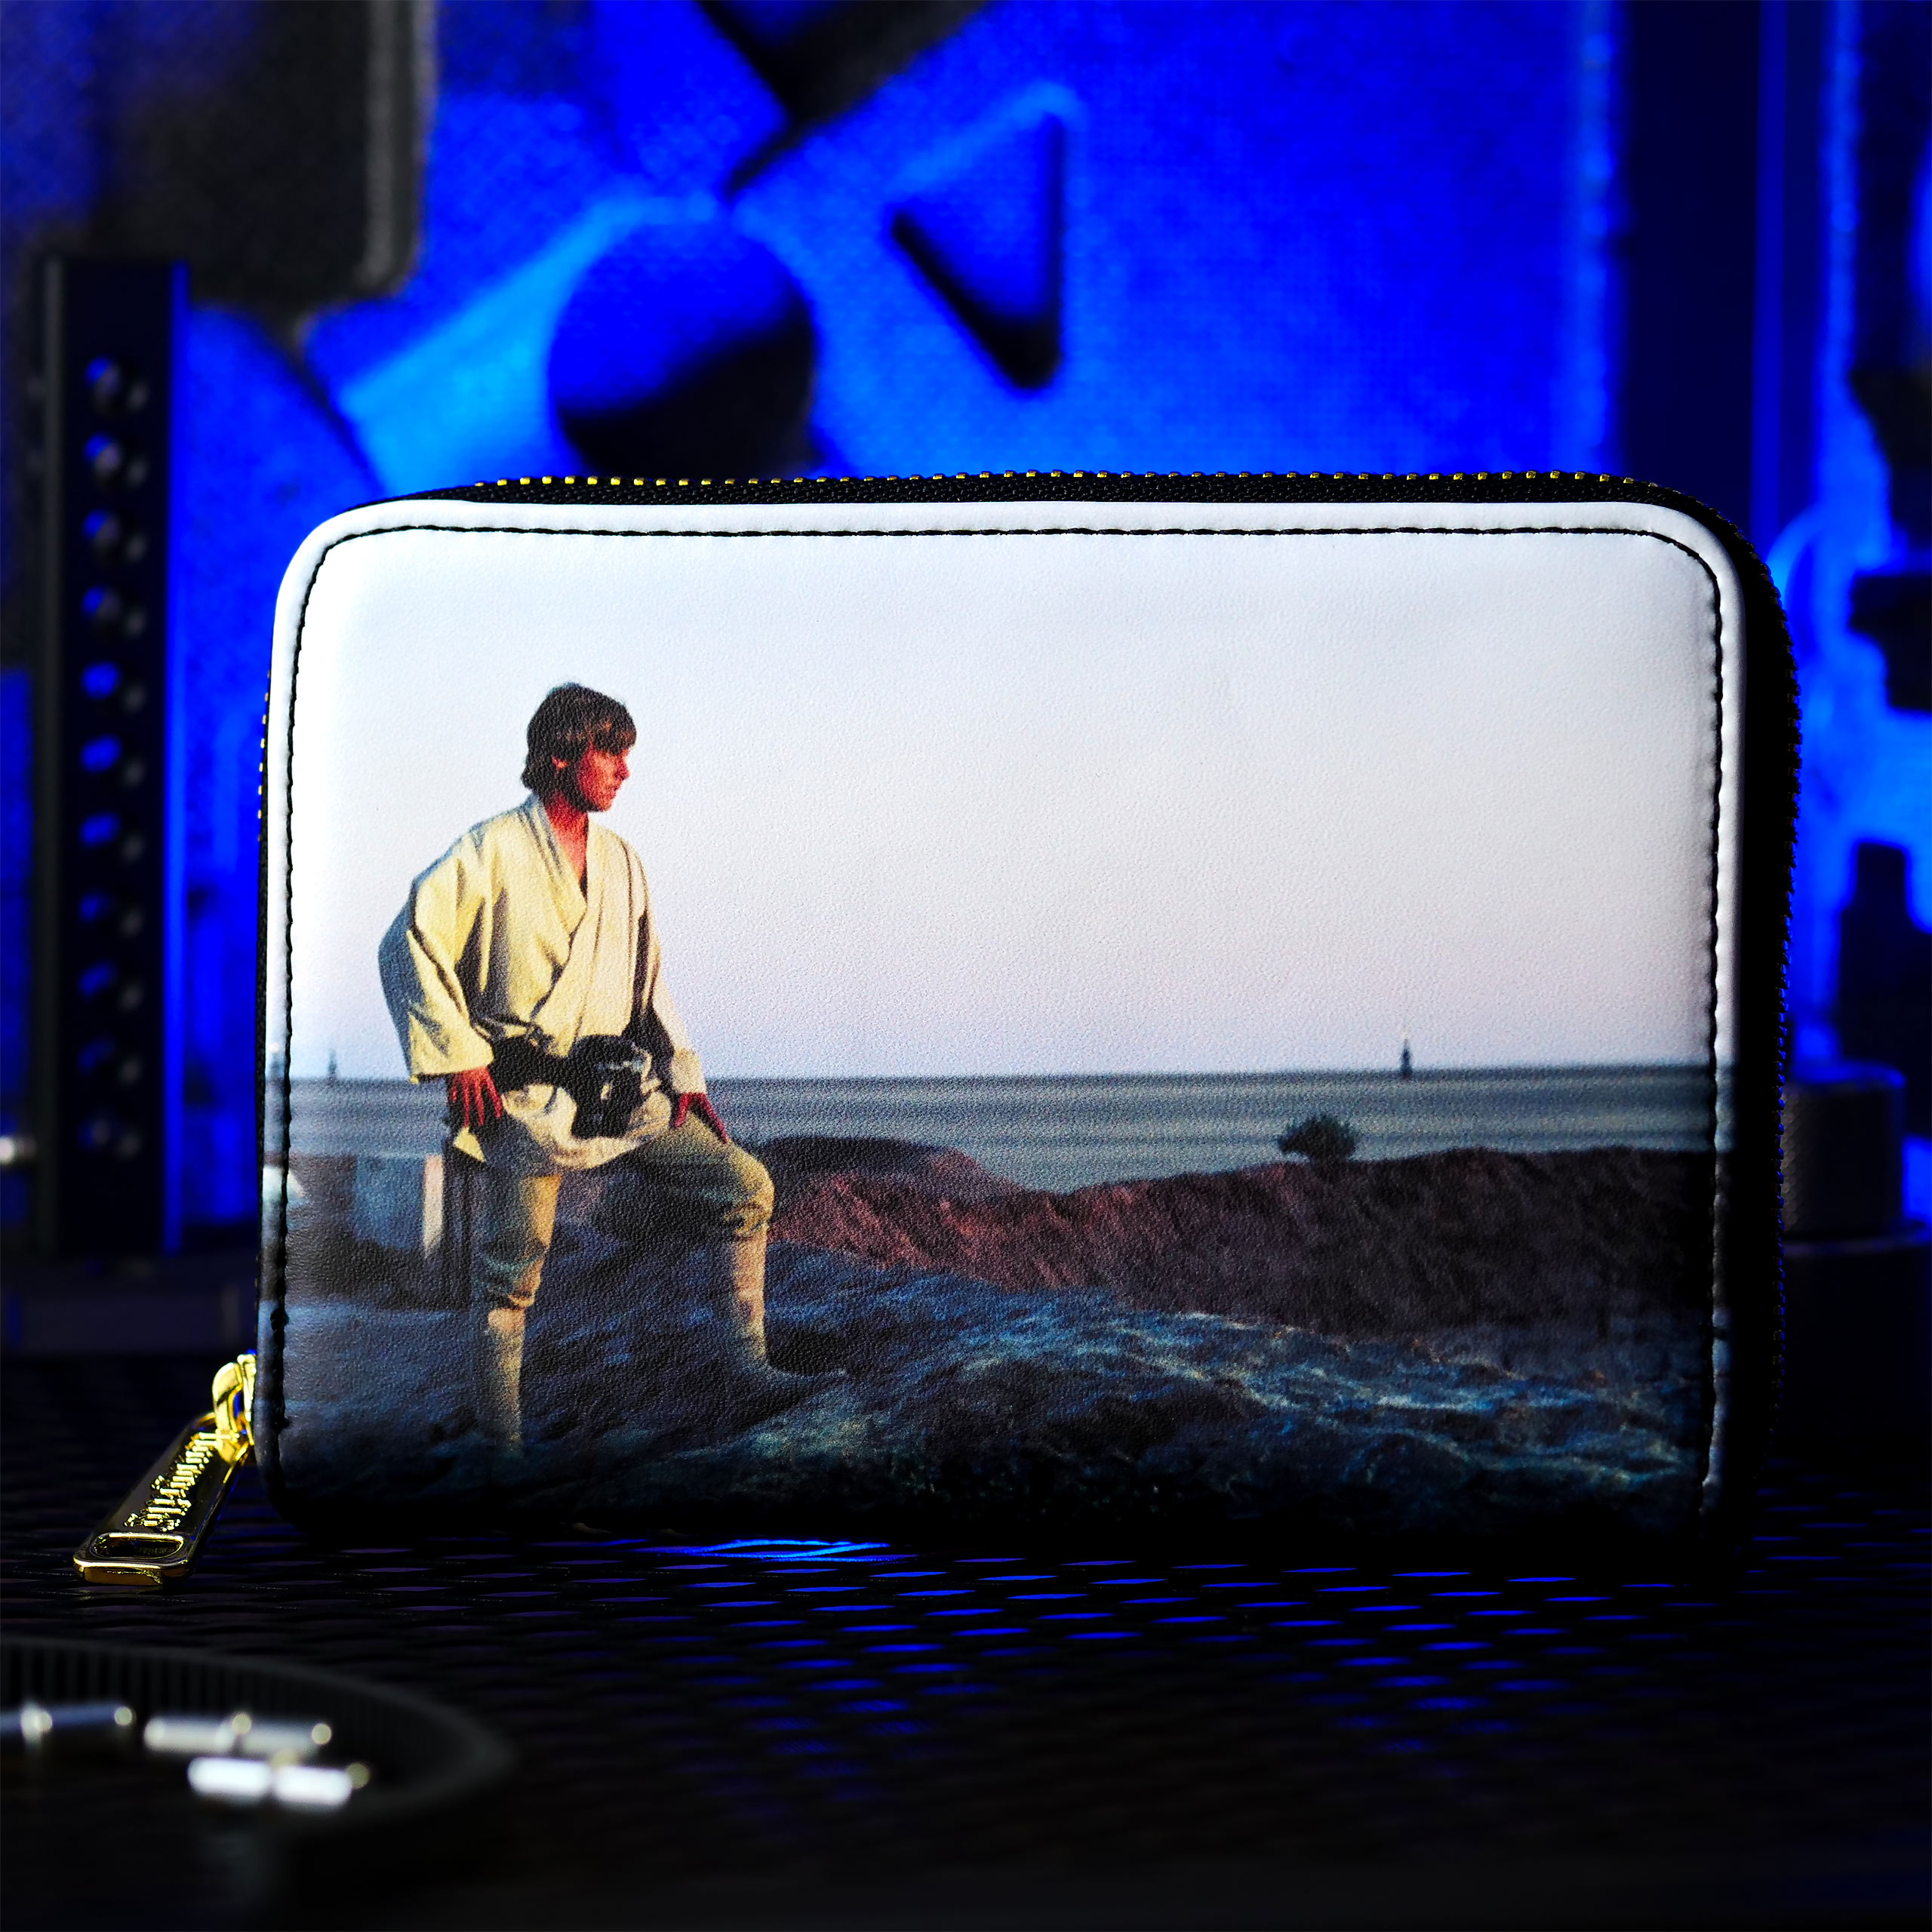 Luke And Leia A New Hope Geldbörse - Star Wars